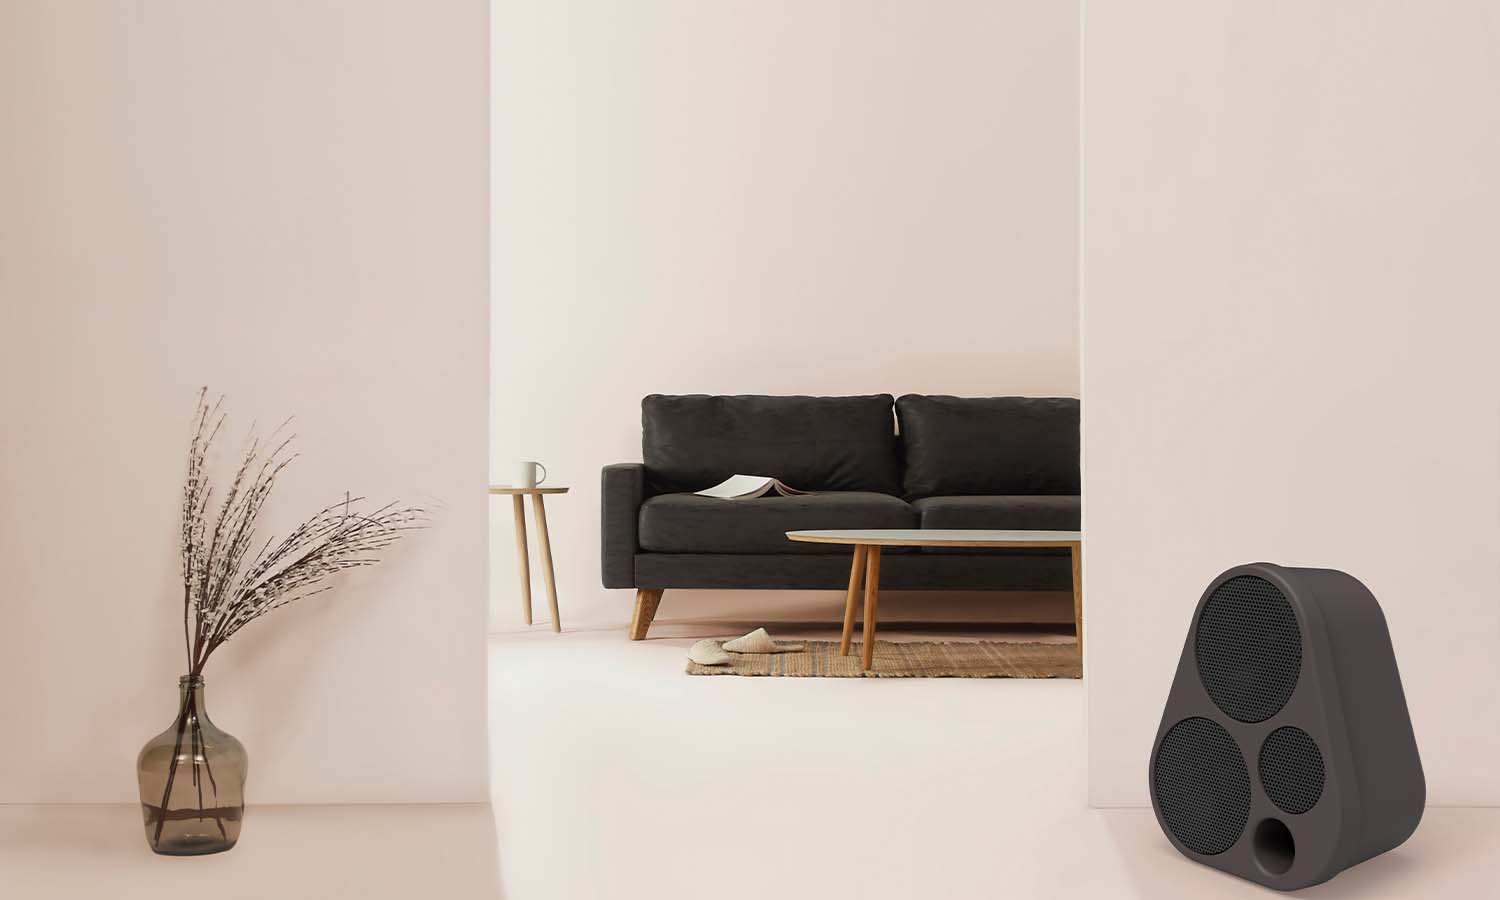 Invite Danish design home to you - Enkl Sound speaker in your living room.